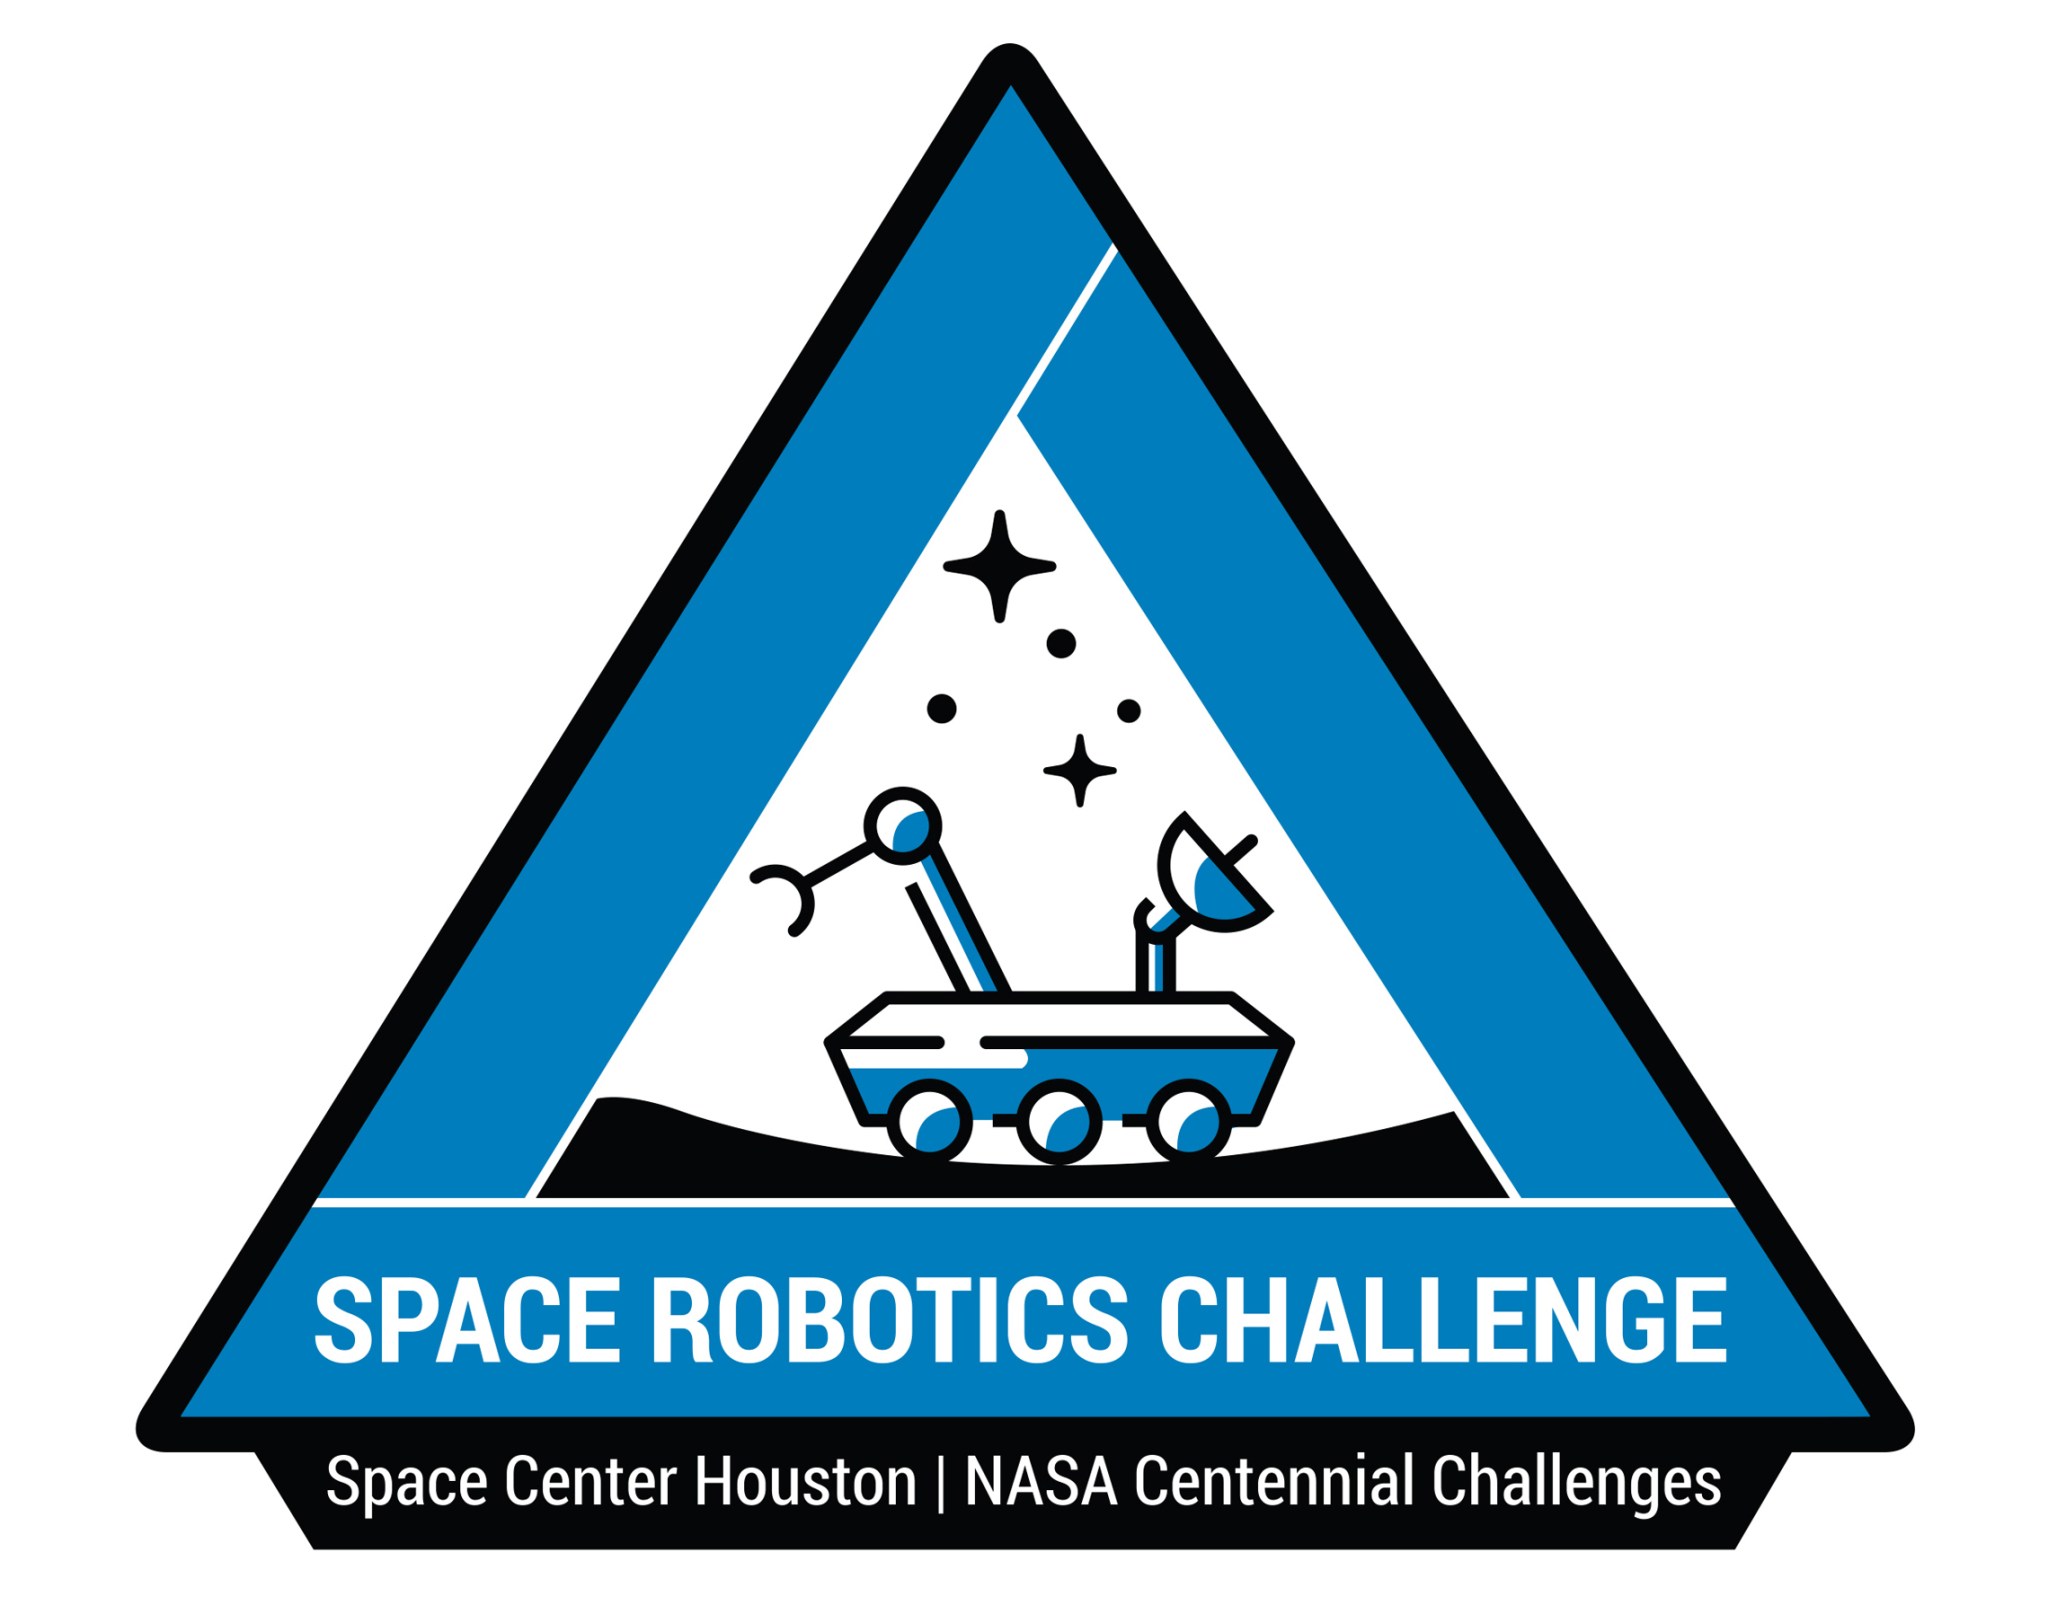 NASA Centennial Challenges Space Robotics Challenge graphic.